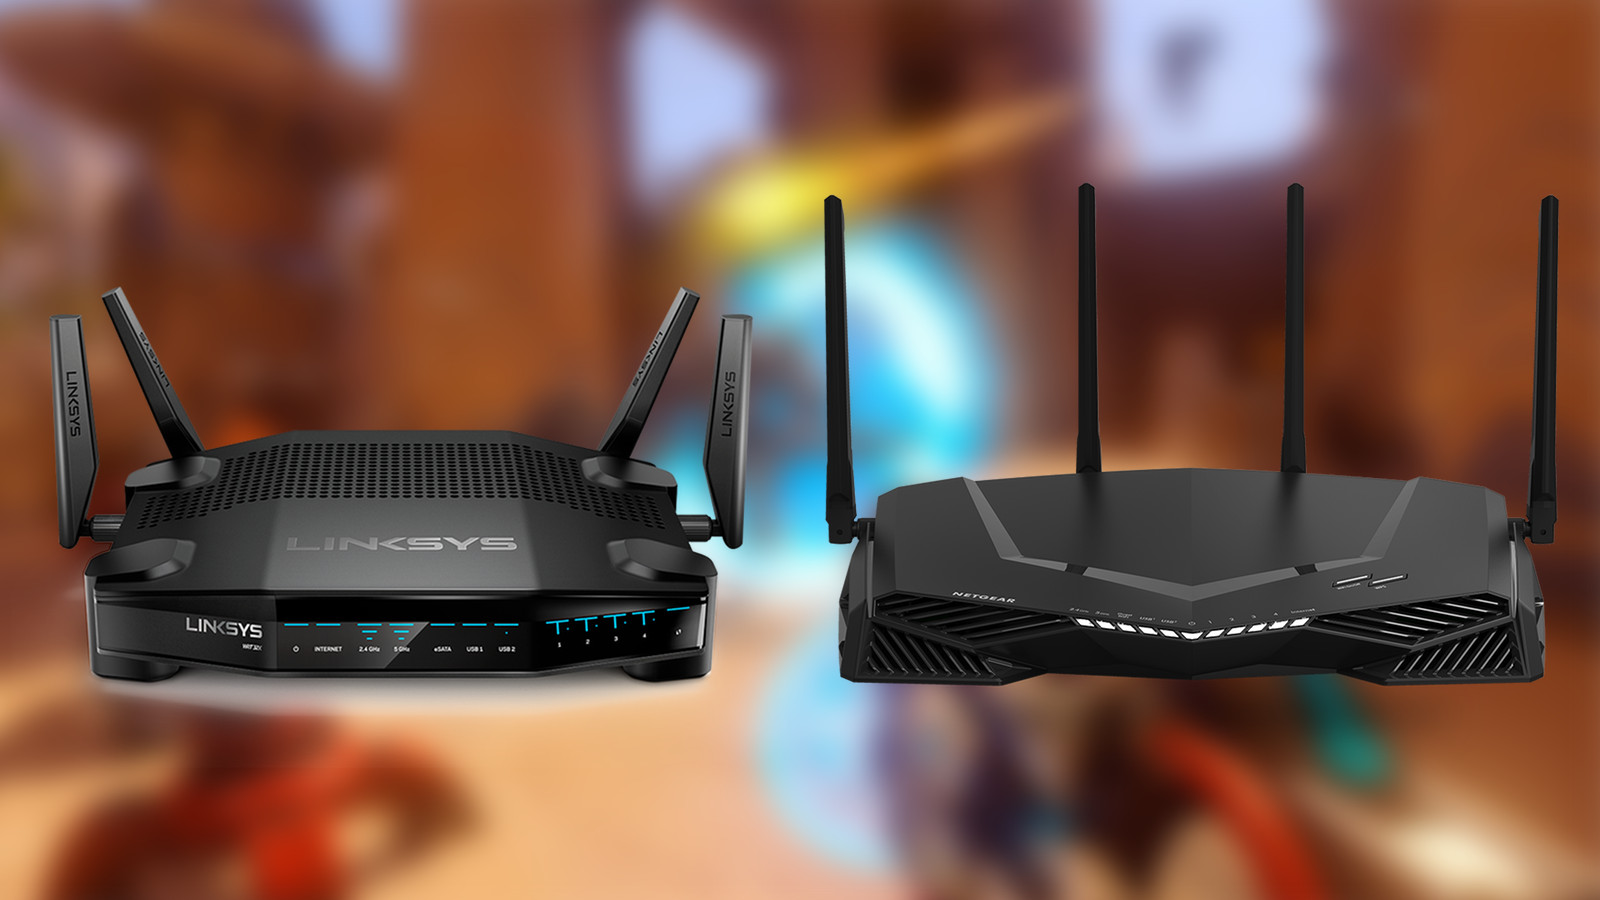 netgear-nighthawk-pro-xr500-linksys-wrt32x-gaming-router-comparison